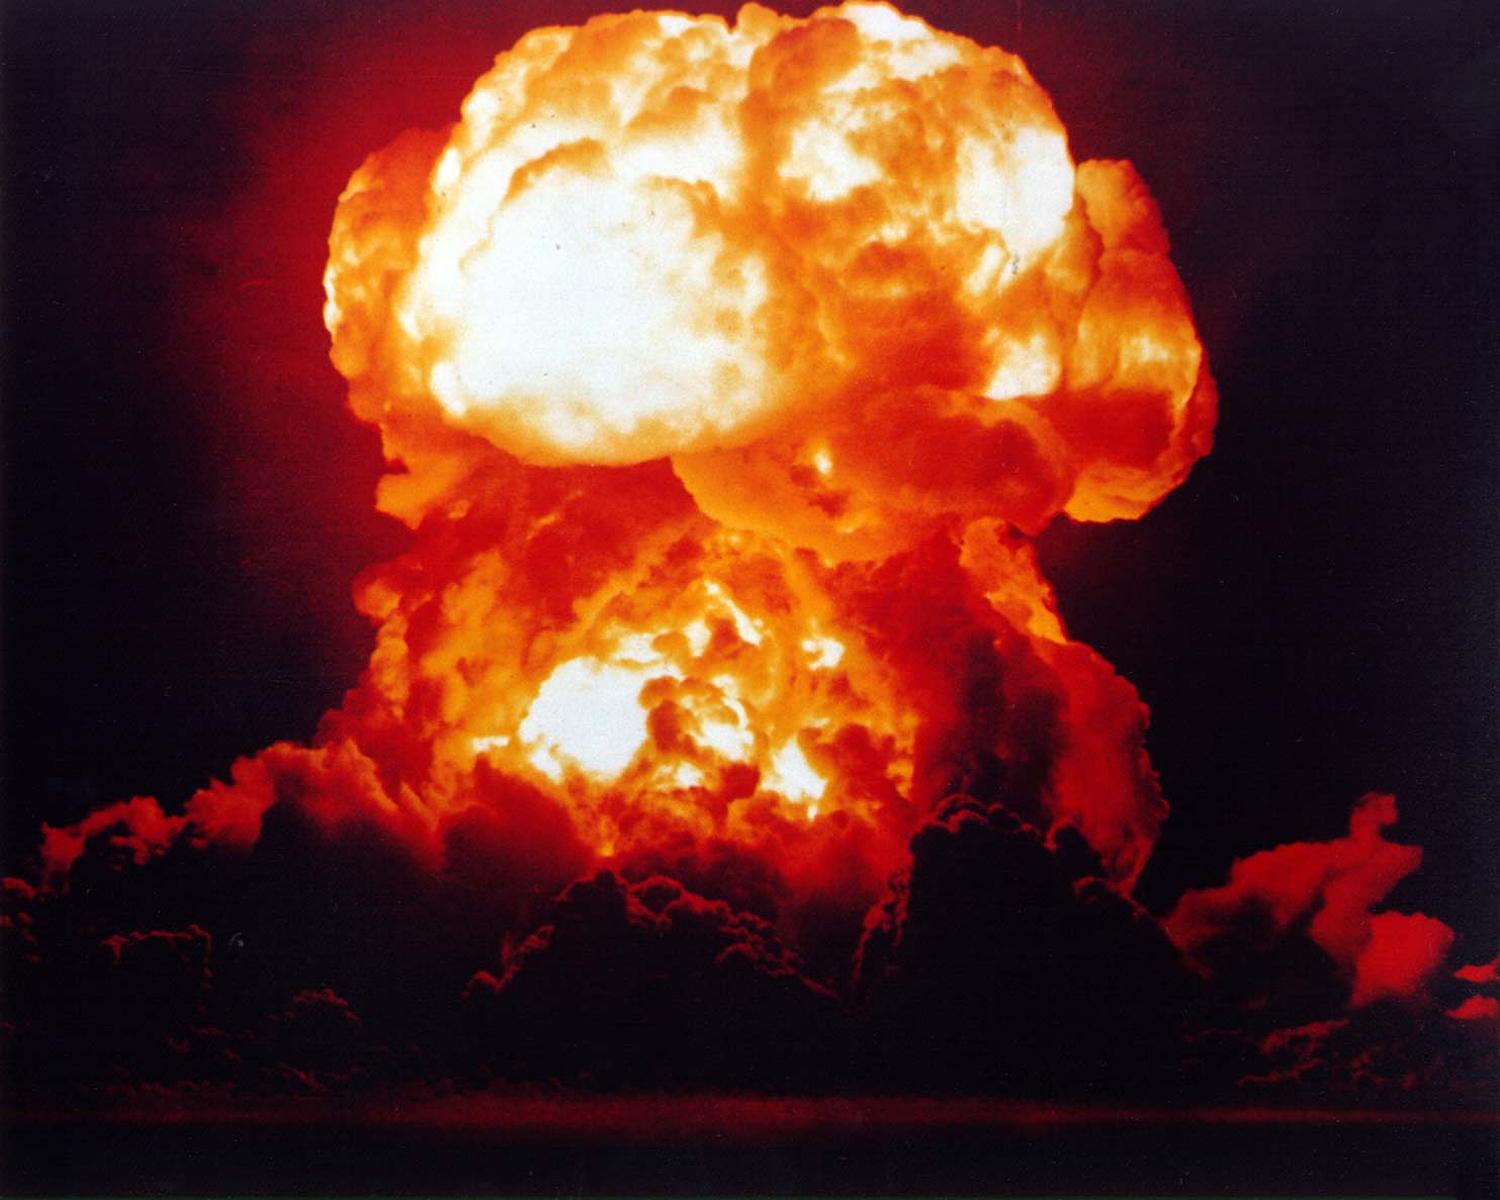 nuclearexplosion43_big.jpg